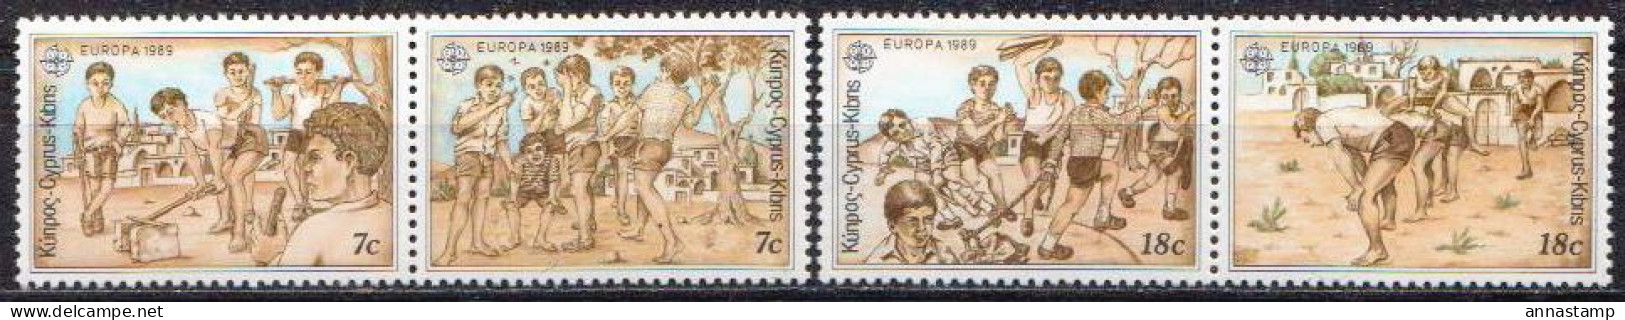 Cyprus MNH Set - 1989